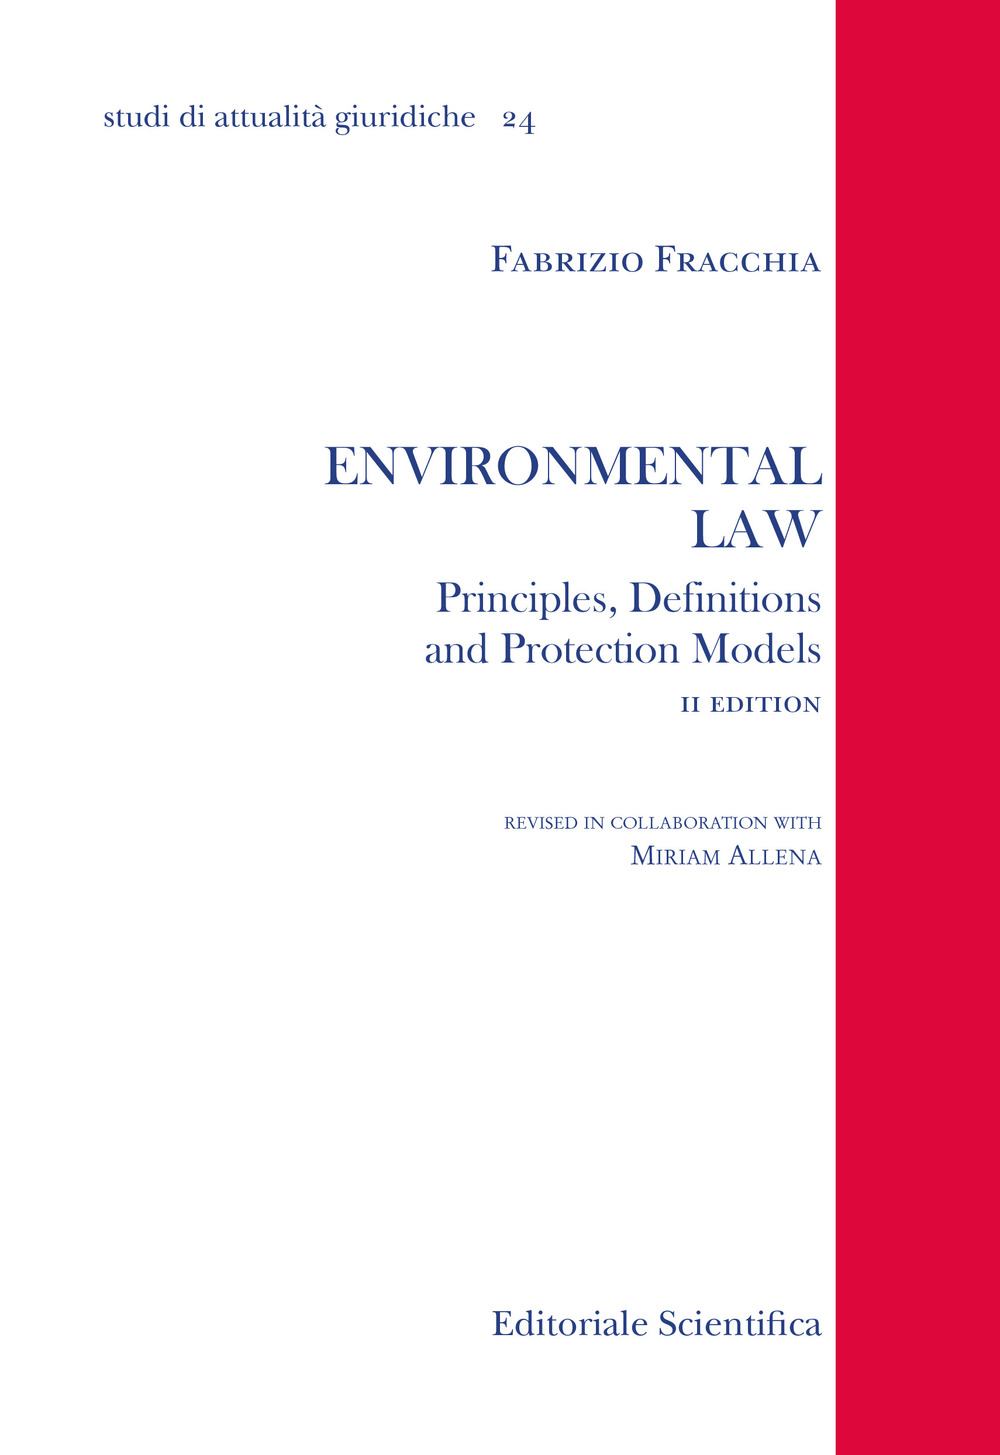 Environmental law. Principles, denifitions and protection models